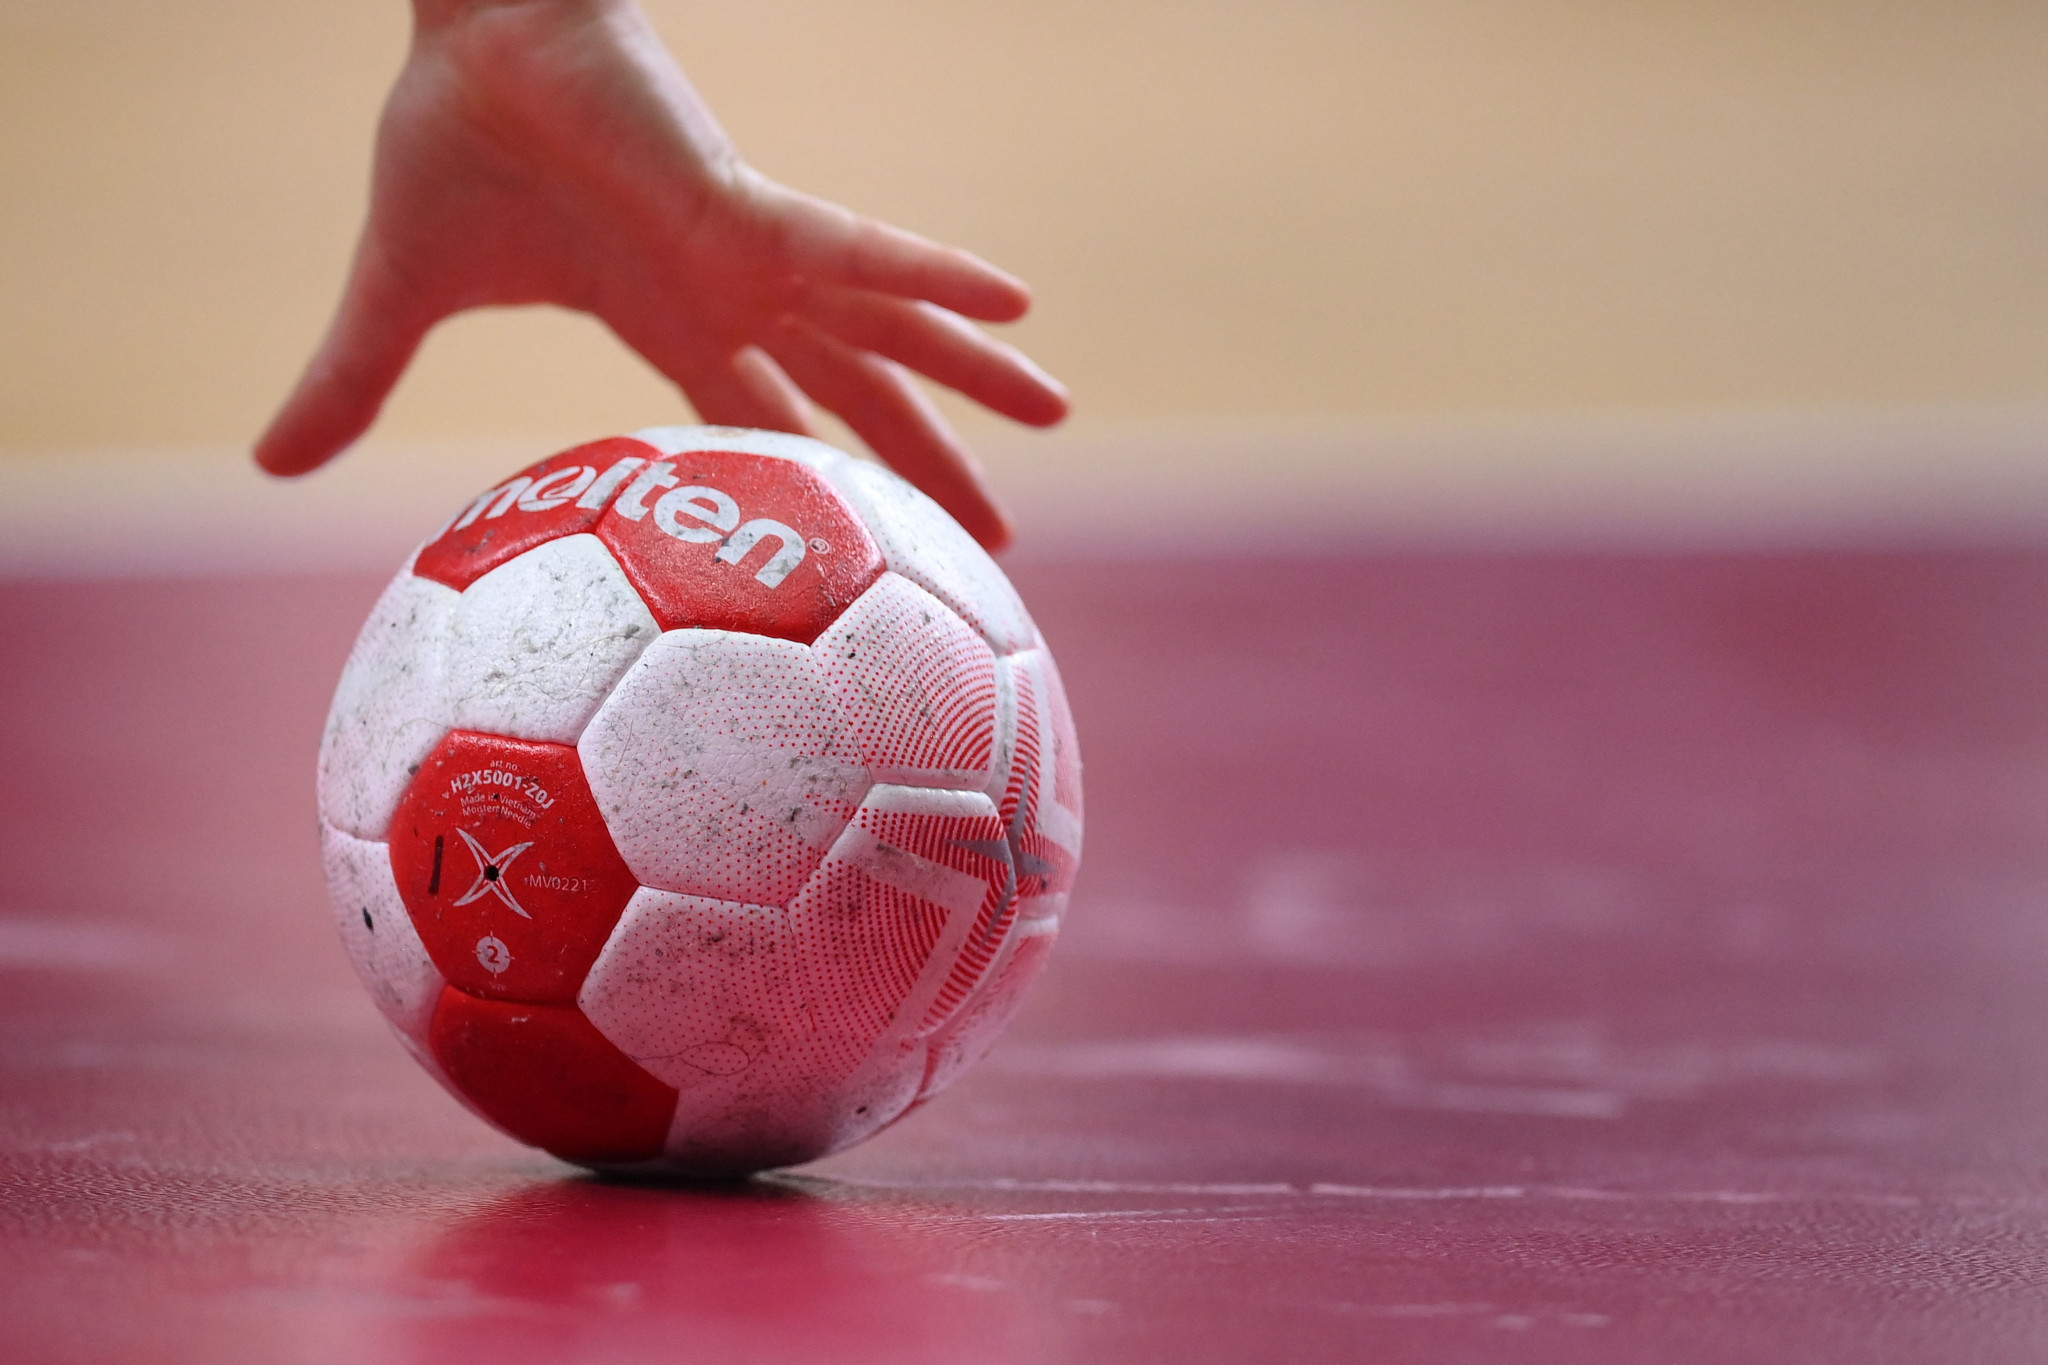 Kosovo poised to host FISU University World Cup of Handball